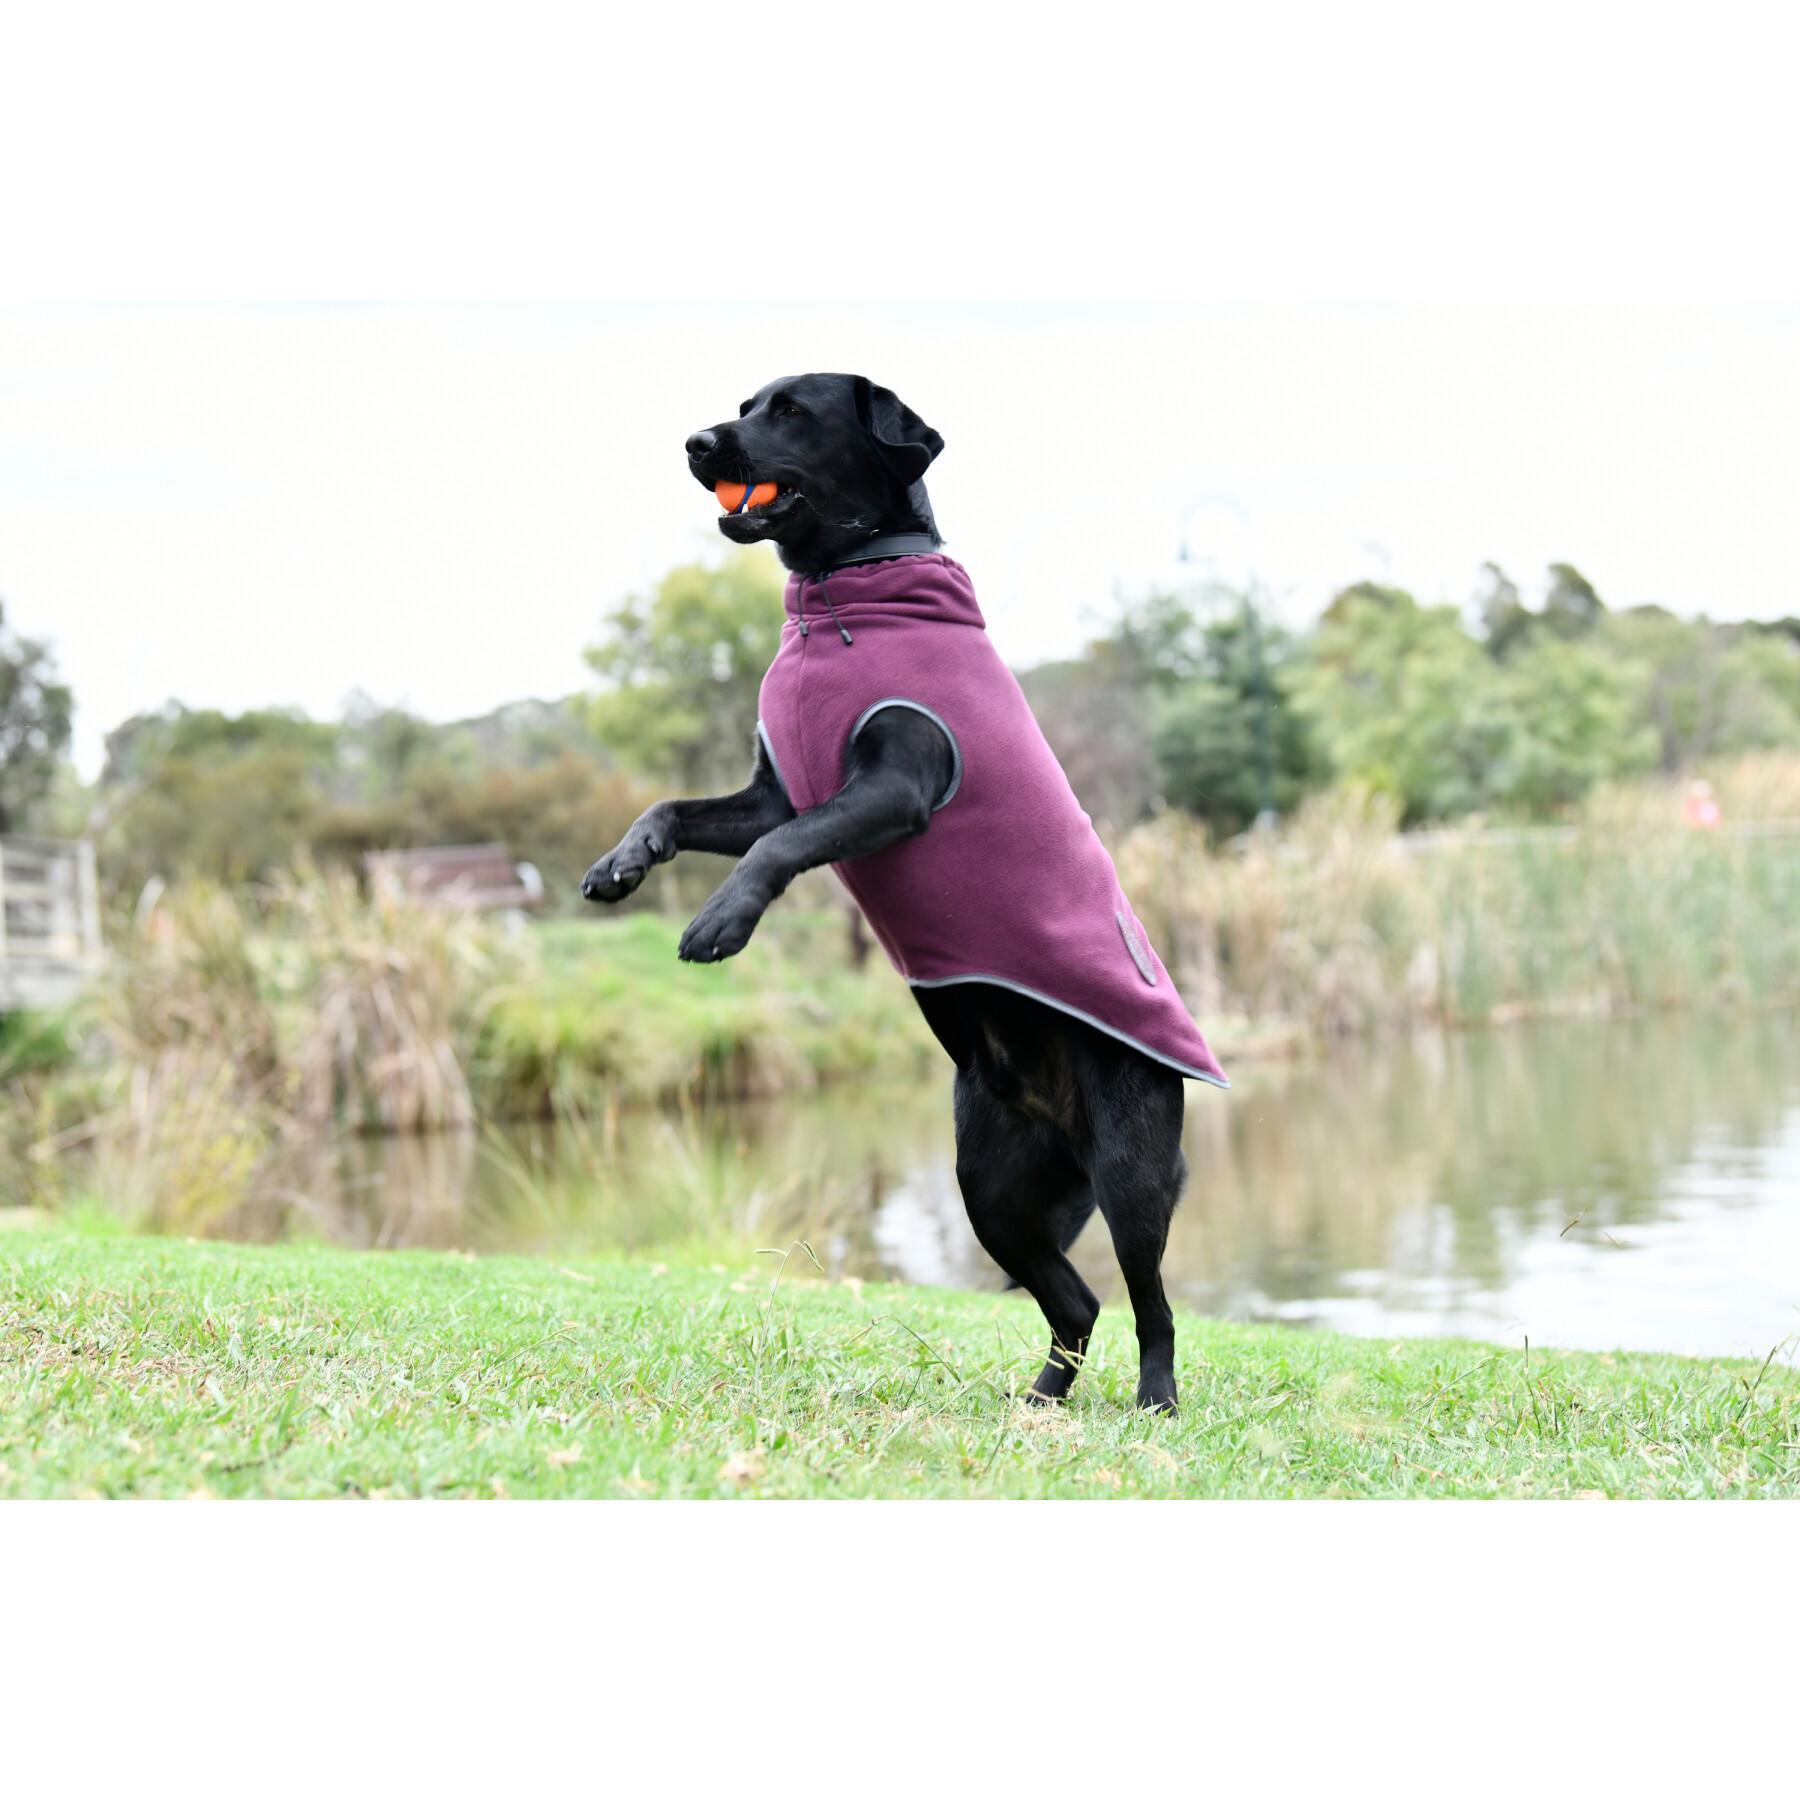 Zipped fleece coat for dogs Weatherbeeta Comfitec